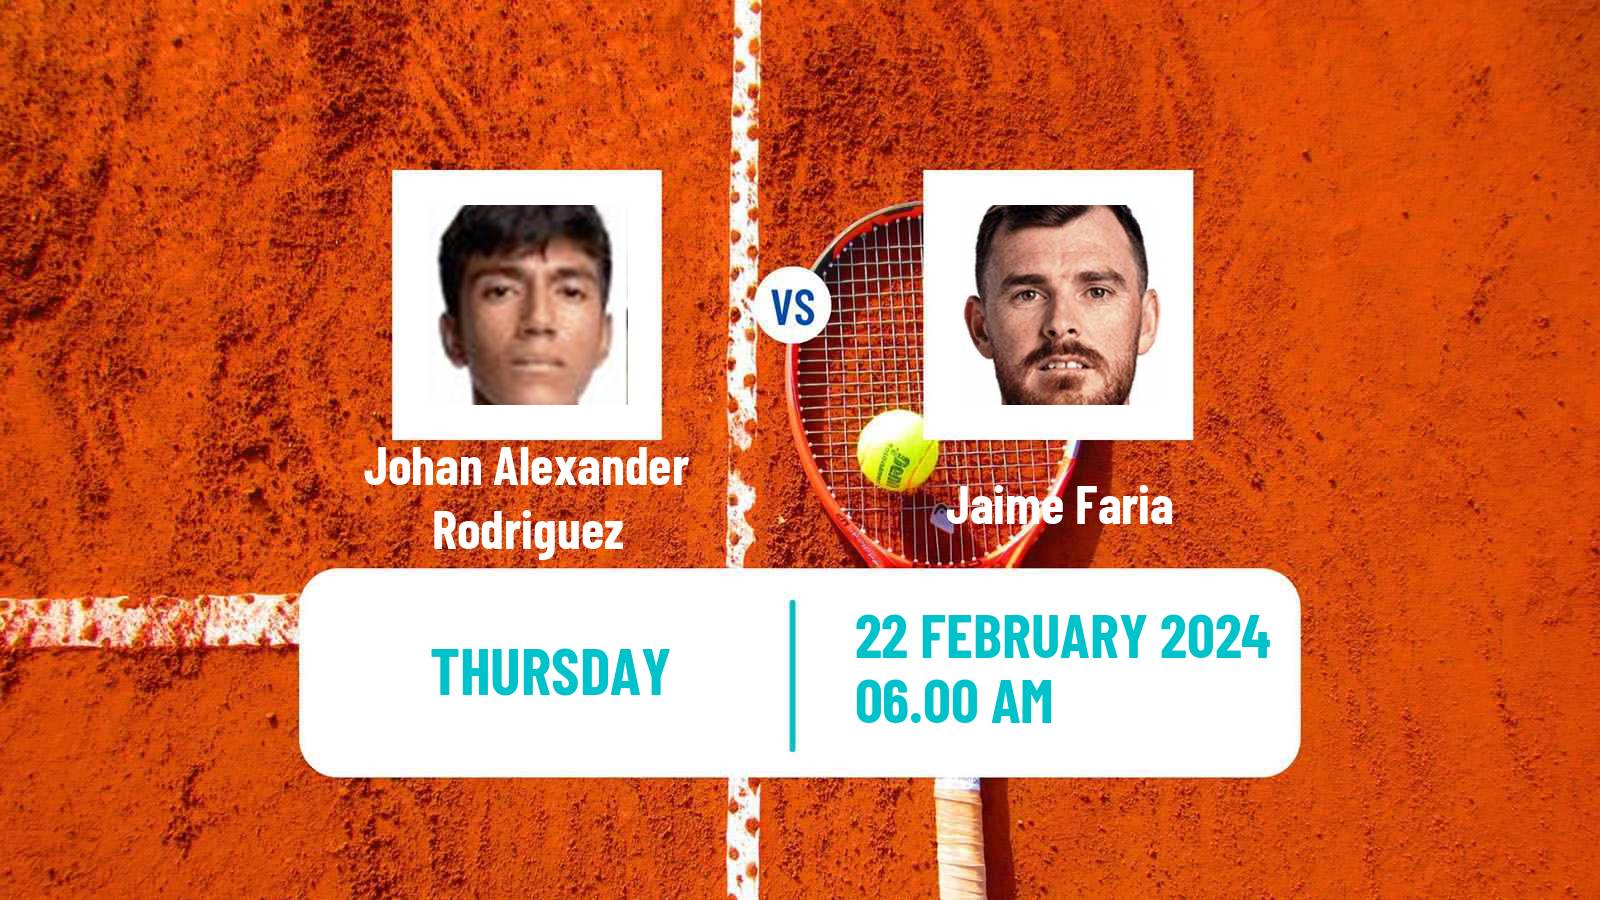 Tennis ITF M25 Vila Real De Santo Antonio 2 Men Johan Alexander Rodriguez - Jaime Faria